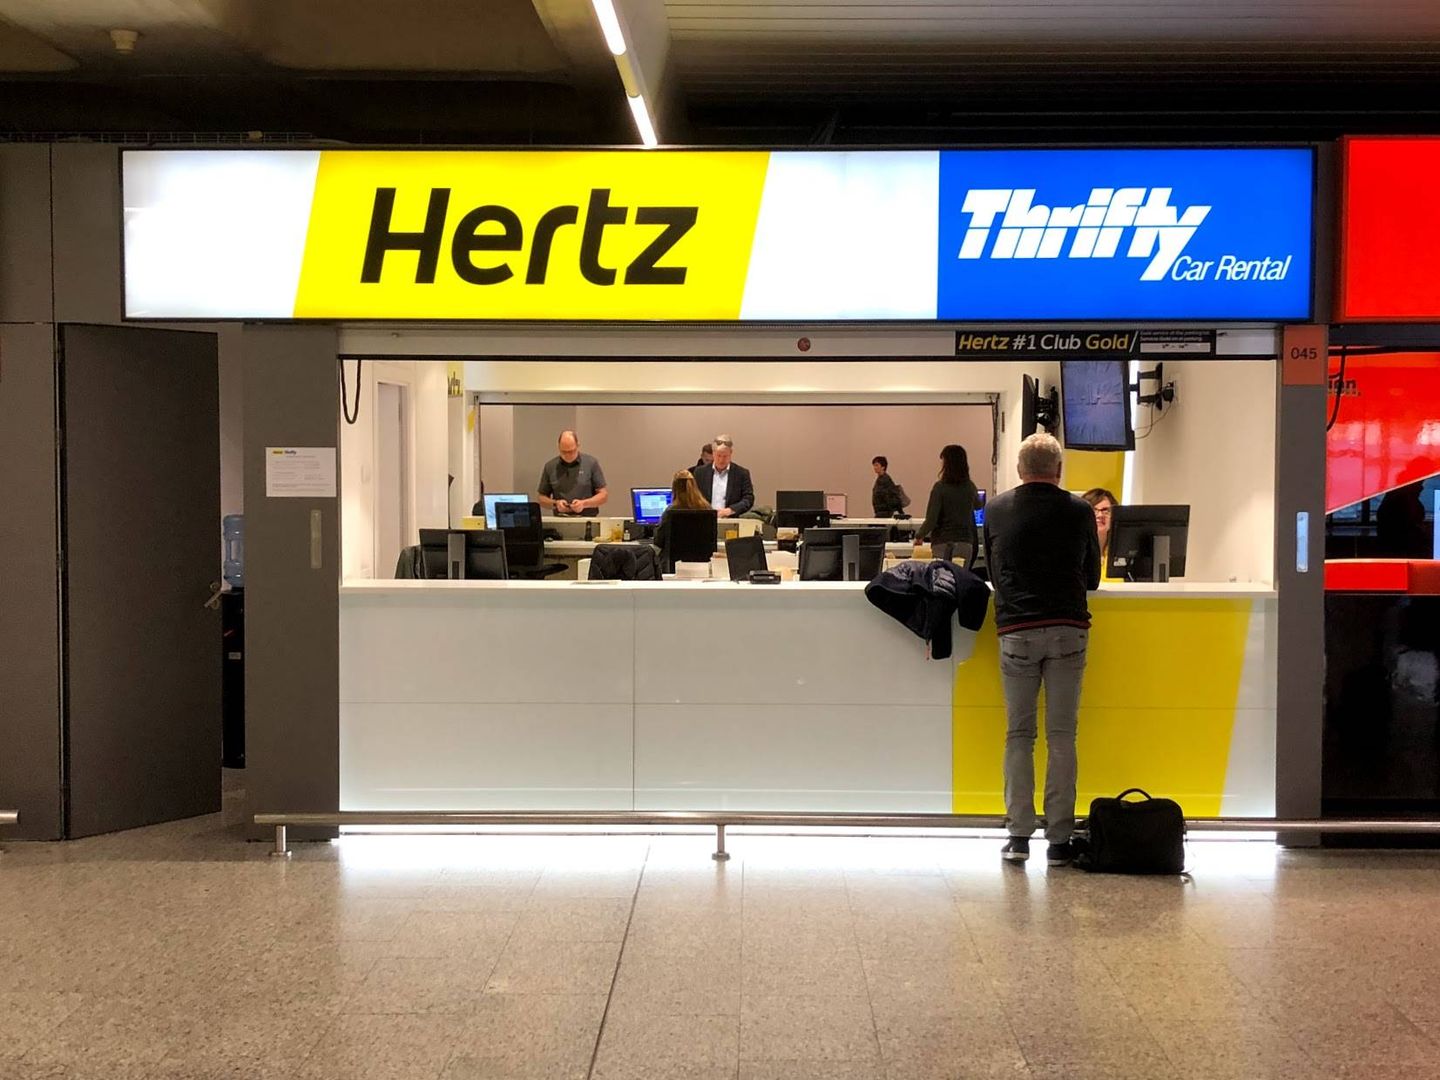 Oficina de Hertz en el Aeropuerto de Palma de Mallorca. 